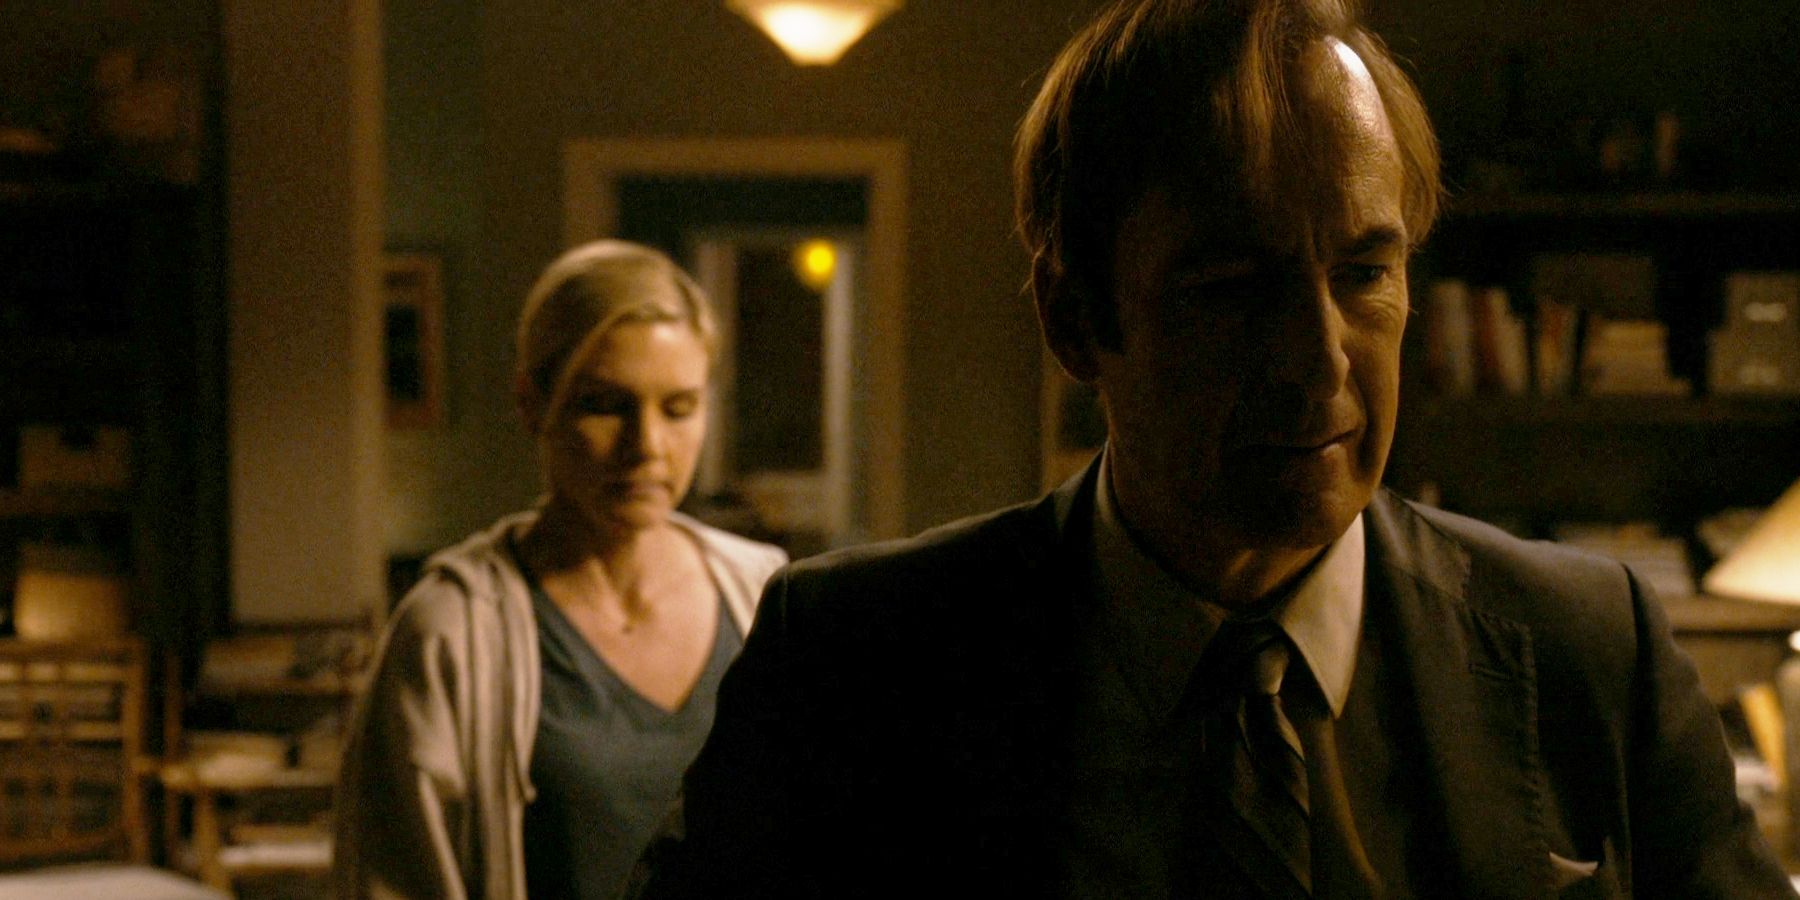 Rhea Seehorn as Kim and Bob Odenkirk as Jimmy in Better Call Saul season 6, episode 9